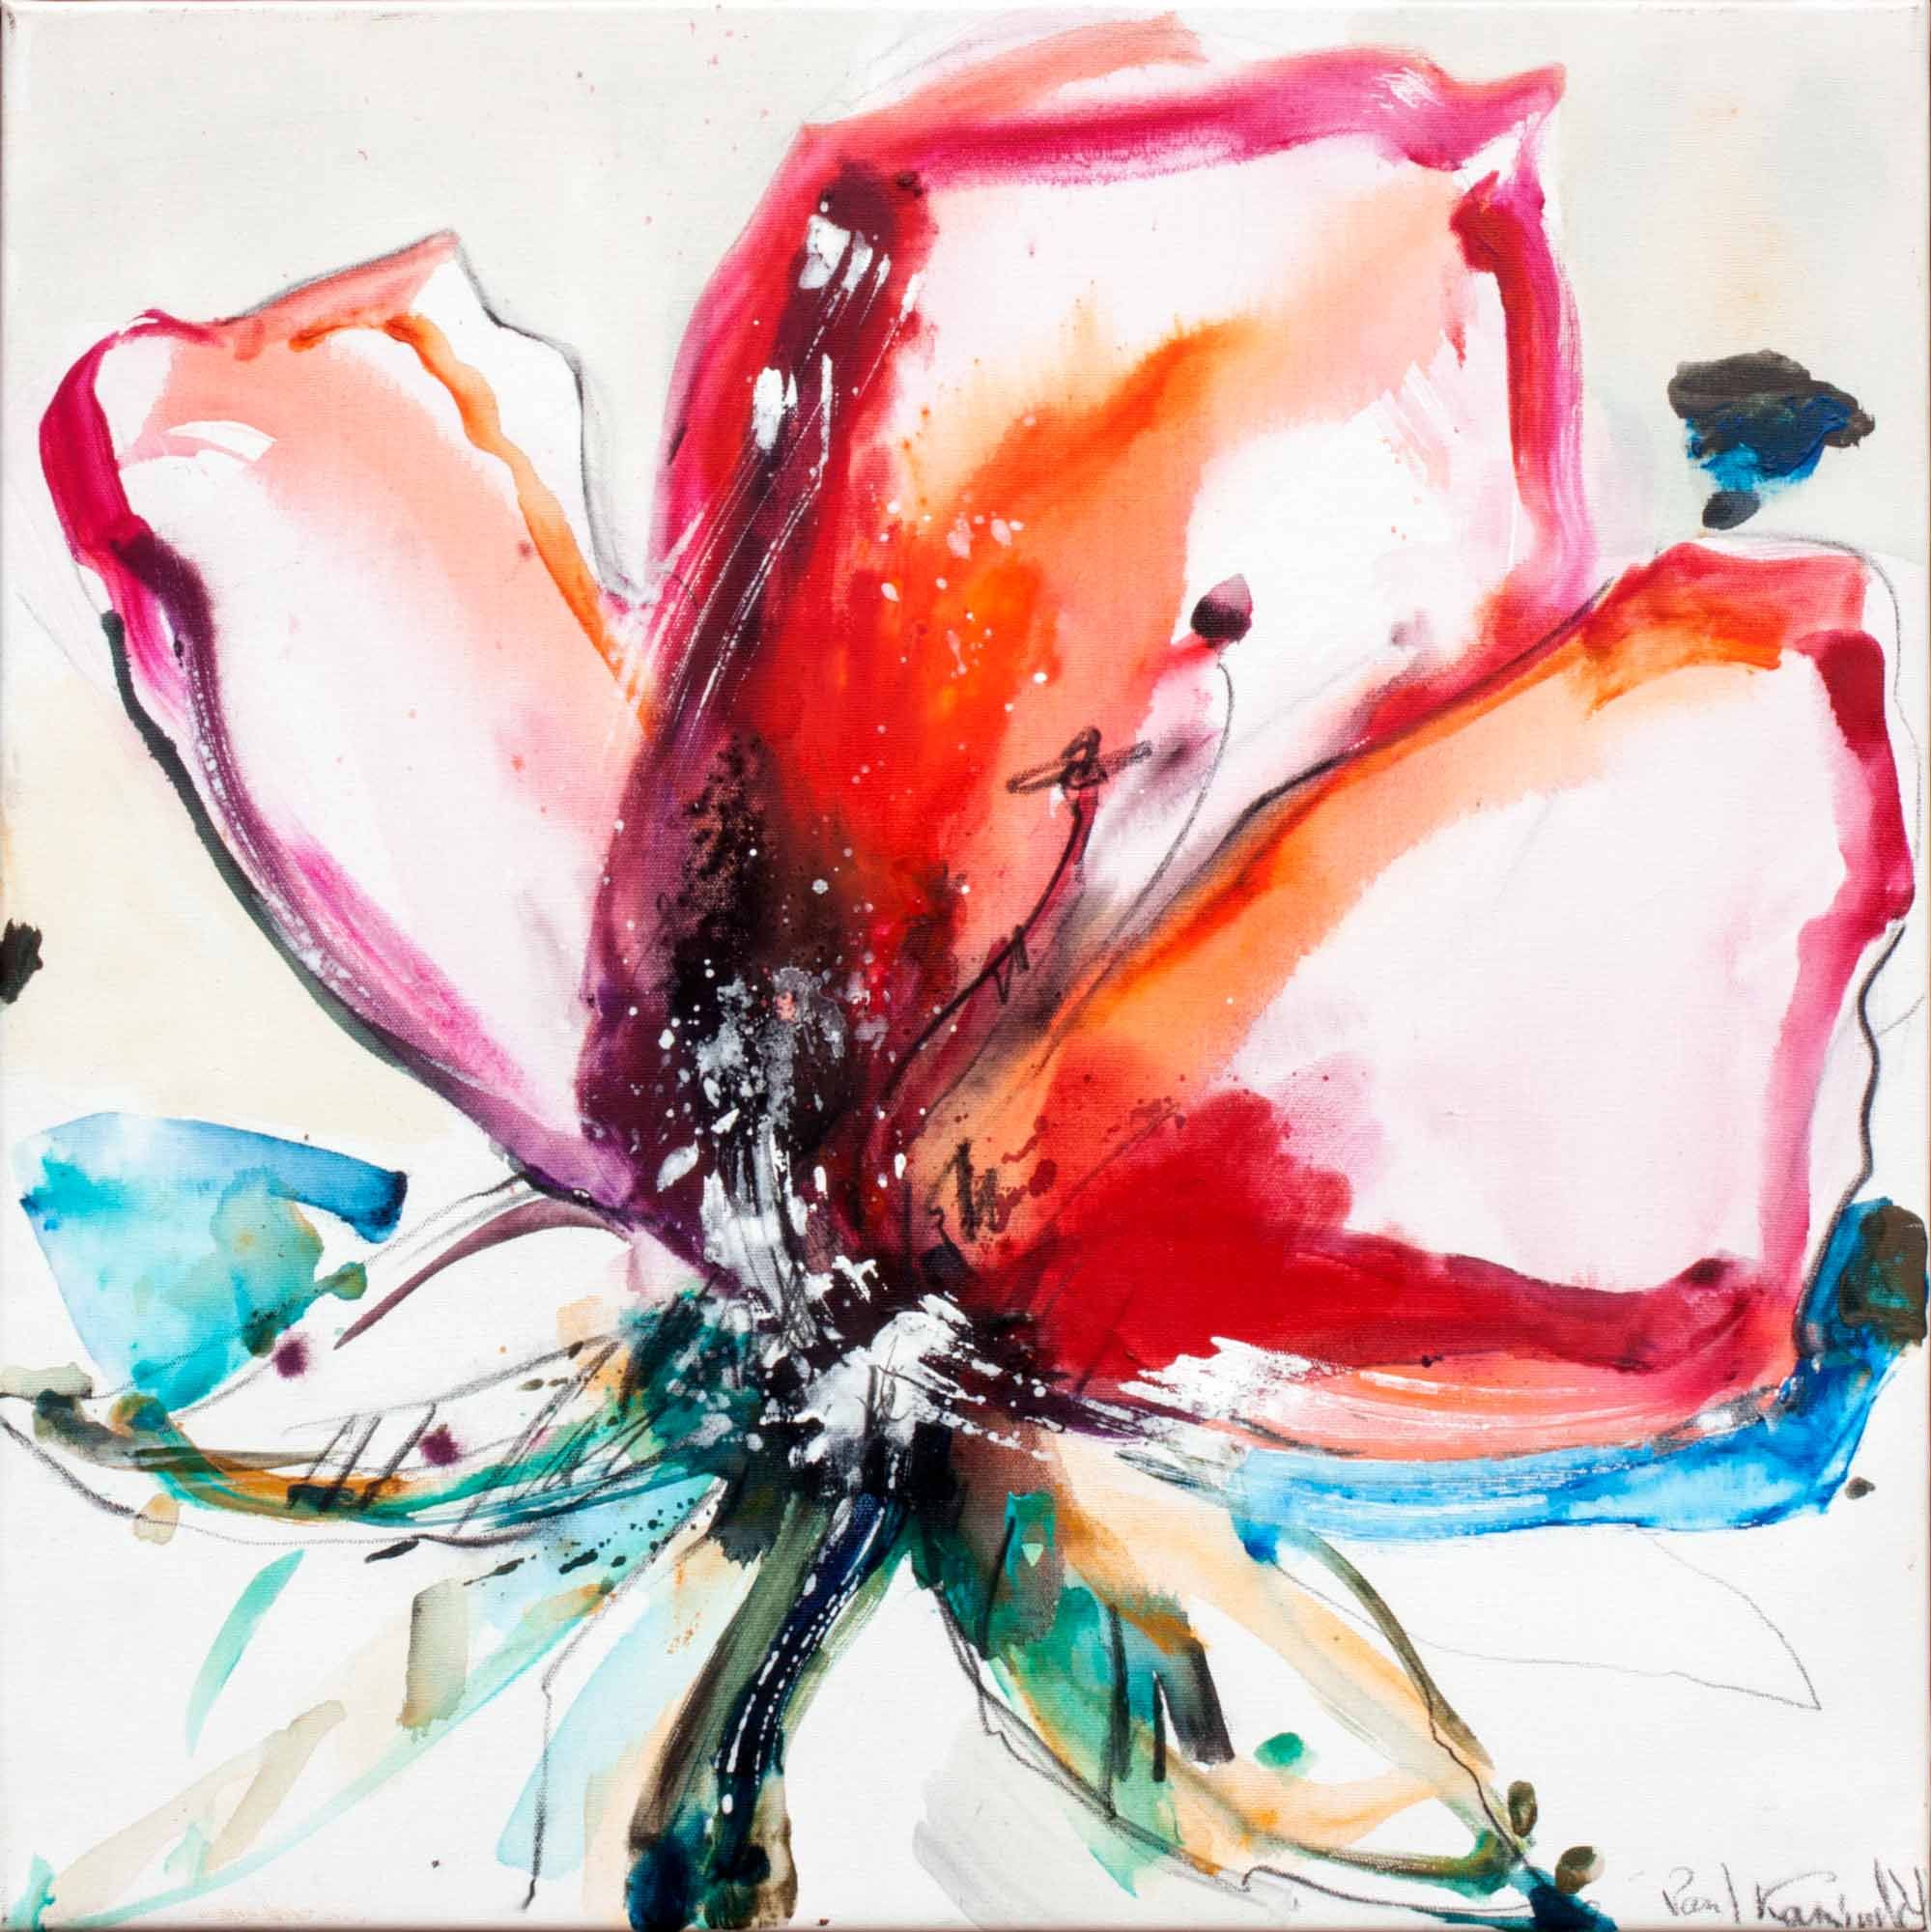 Original painting by Paul Kominsky. "Flower" Contemporary art in Satija Gallery